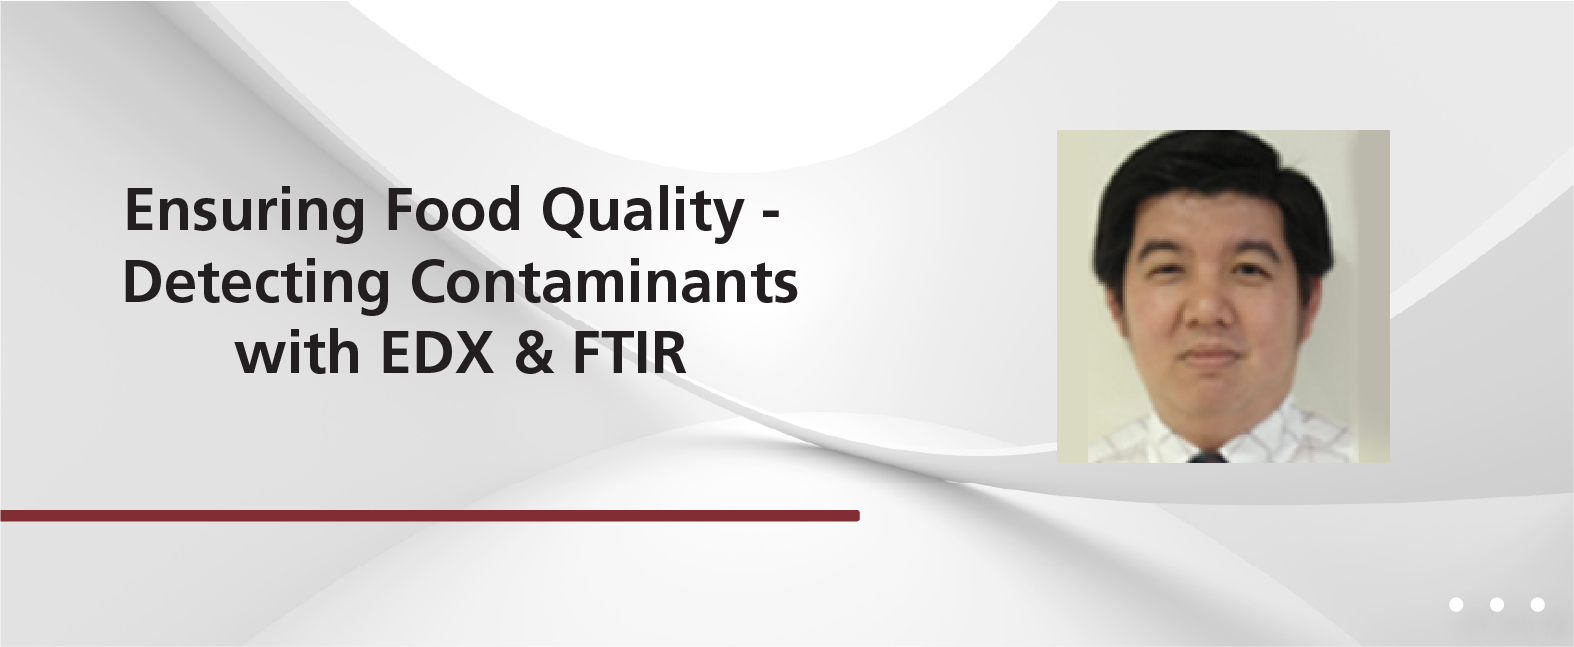 Ensuring Food Quality, Detecting Contaminants with EDX & FTIR